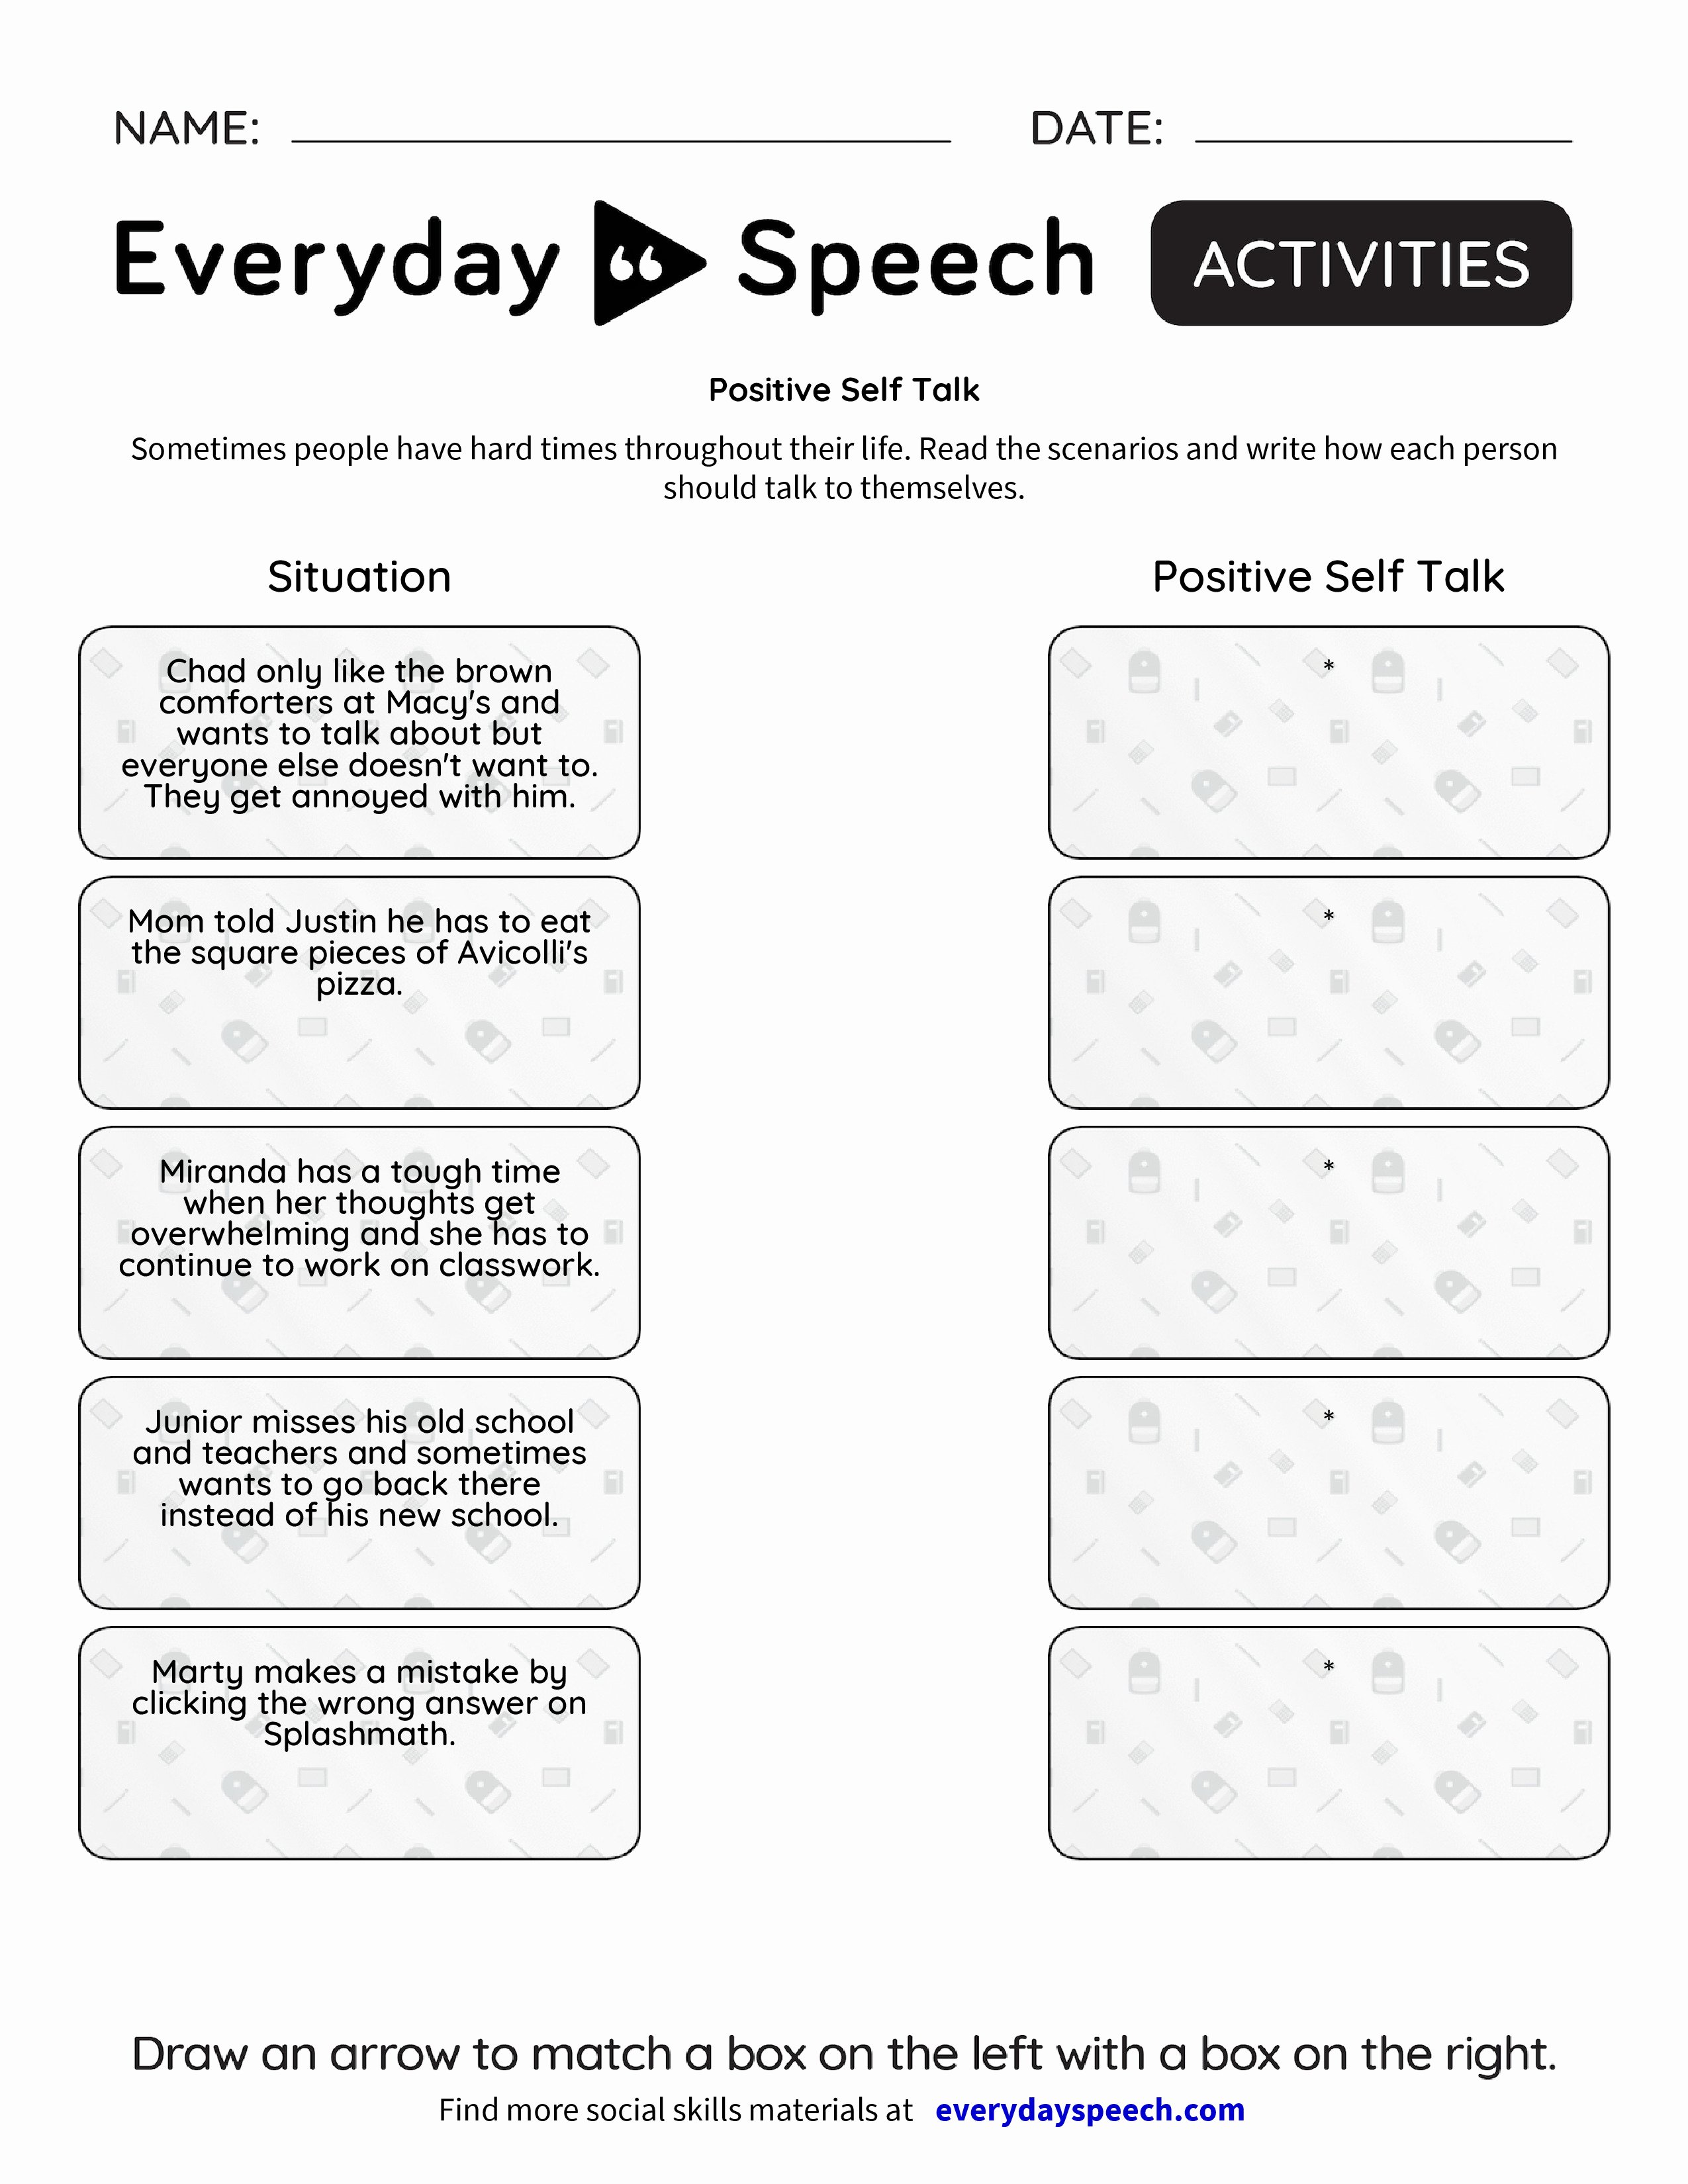 Positive Self Talk Worksheet Unique Positive Self Talk Everyday Speech Everyday Speech